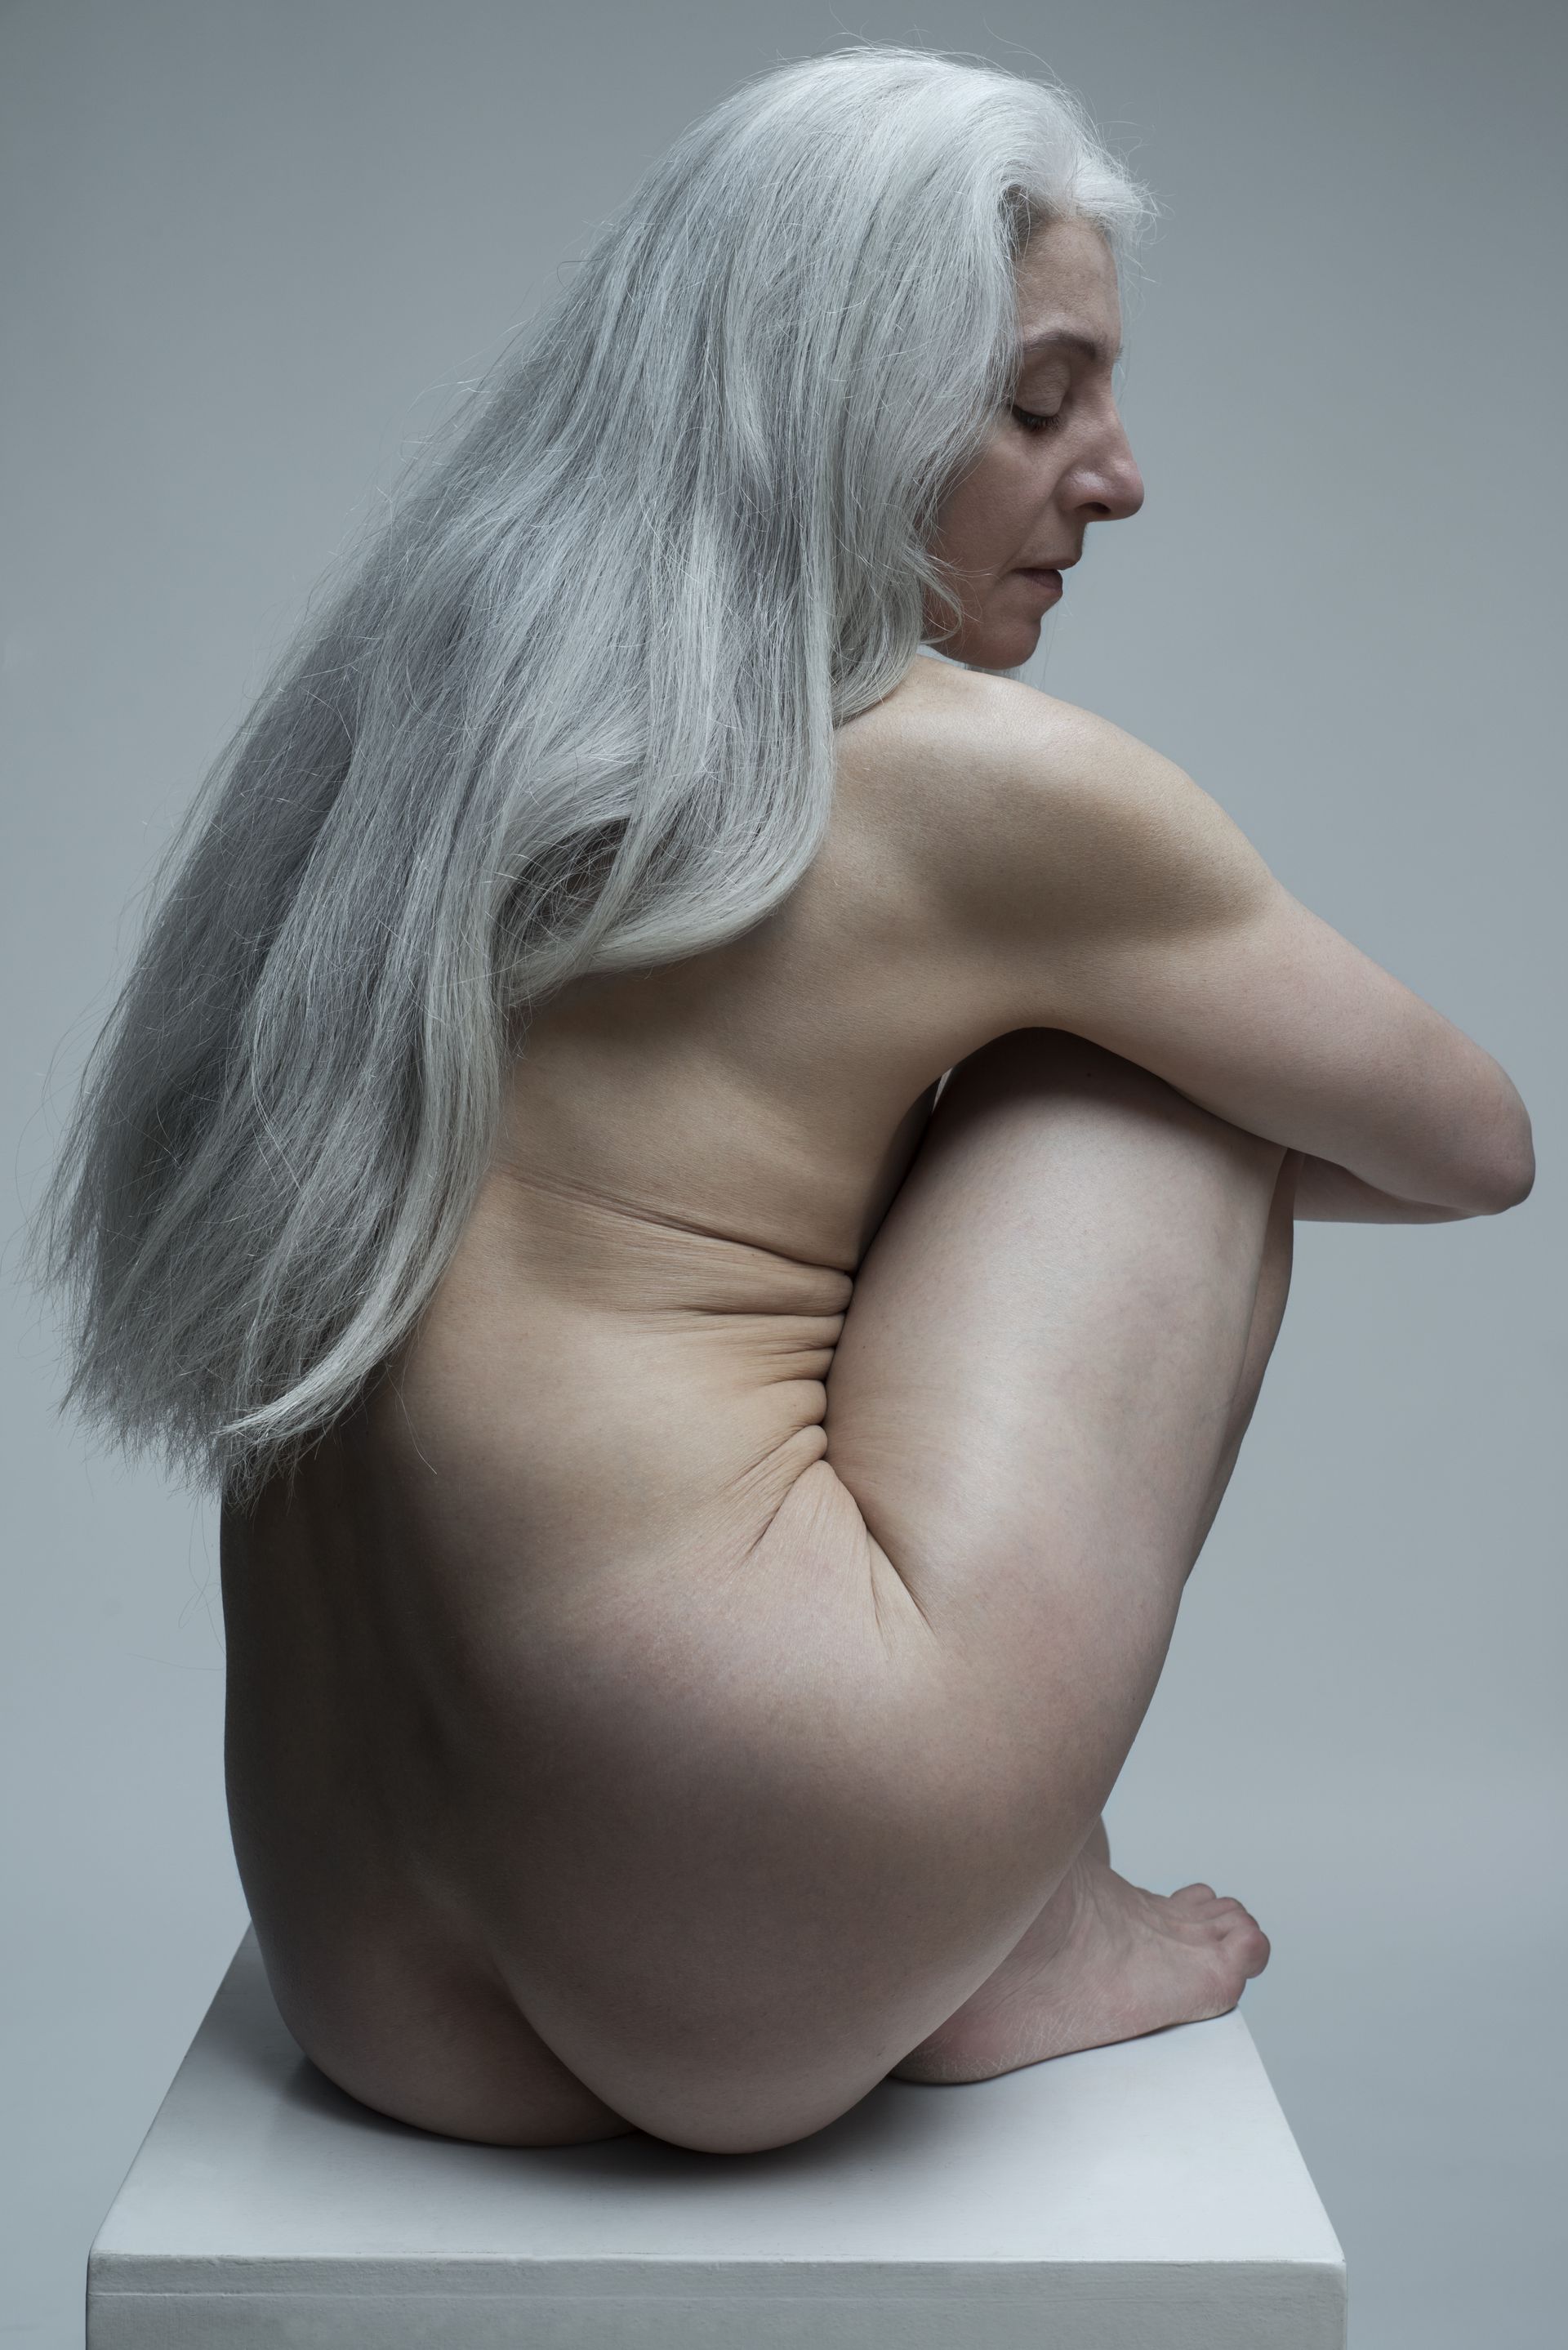 Mature naked woman sitting in studio shot. 